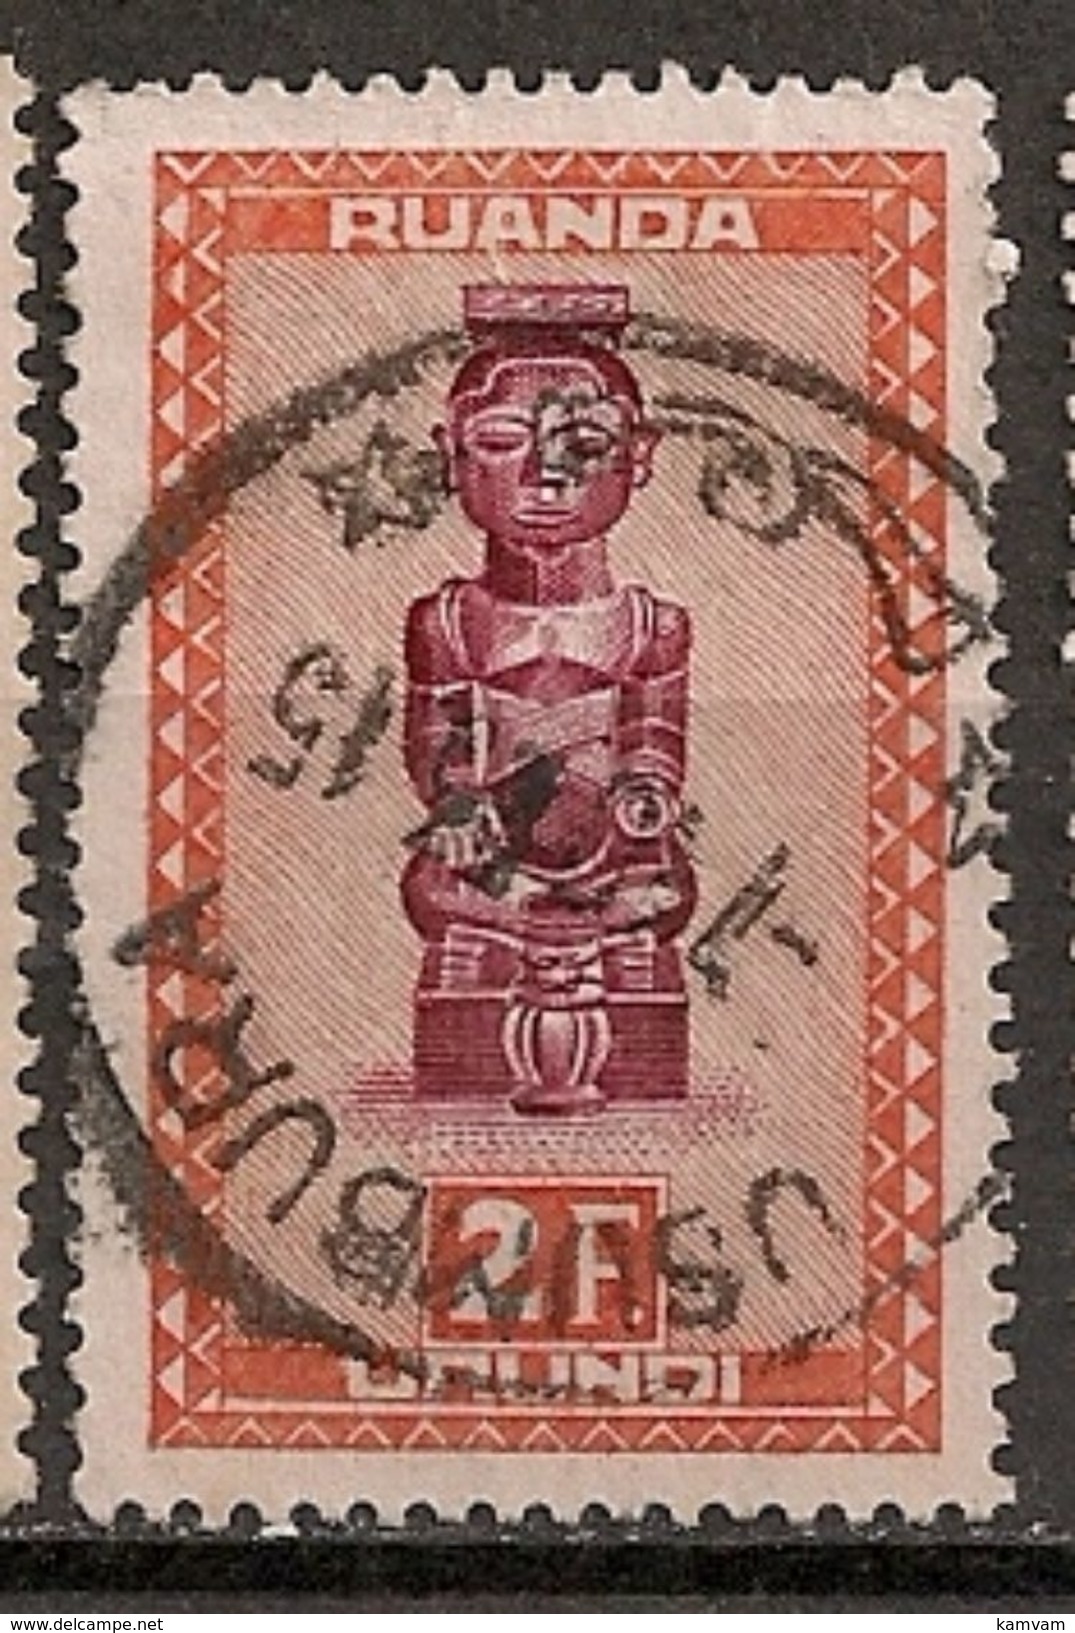 CONGO RUANDA URUNDI 164 USUMBURA - Used Stamps